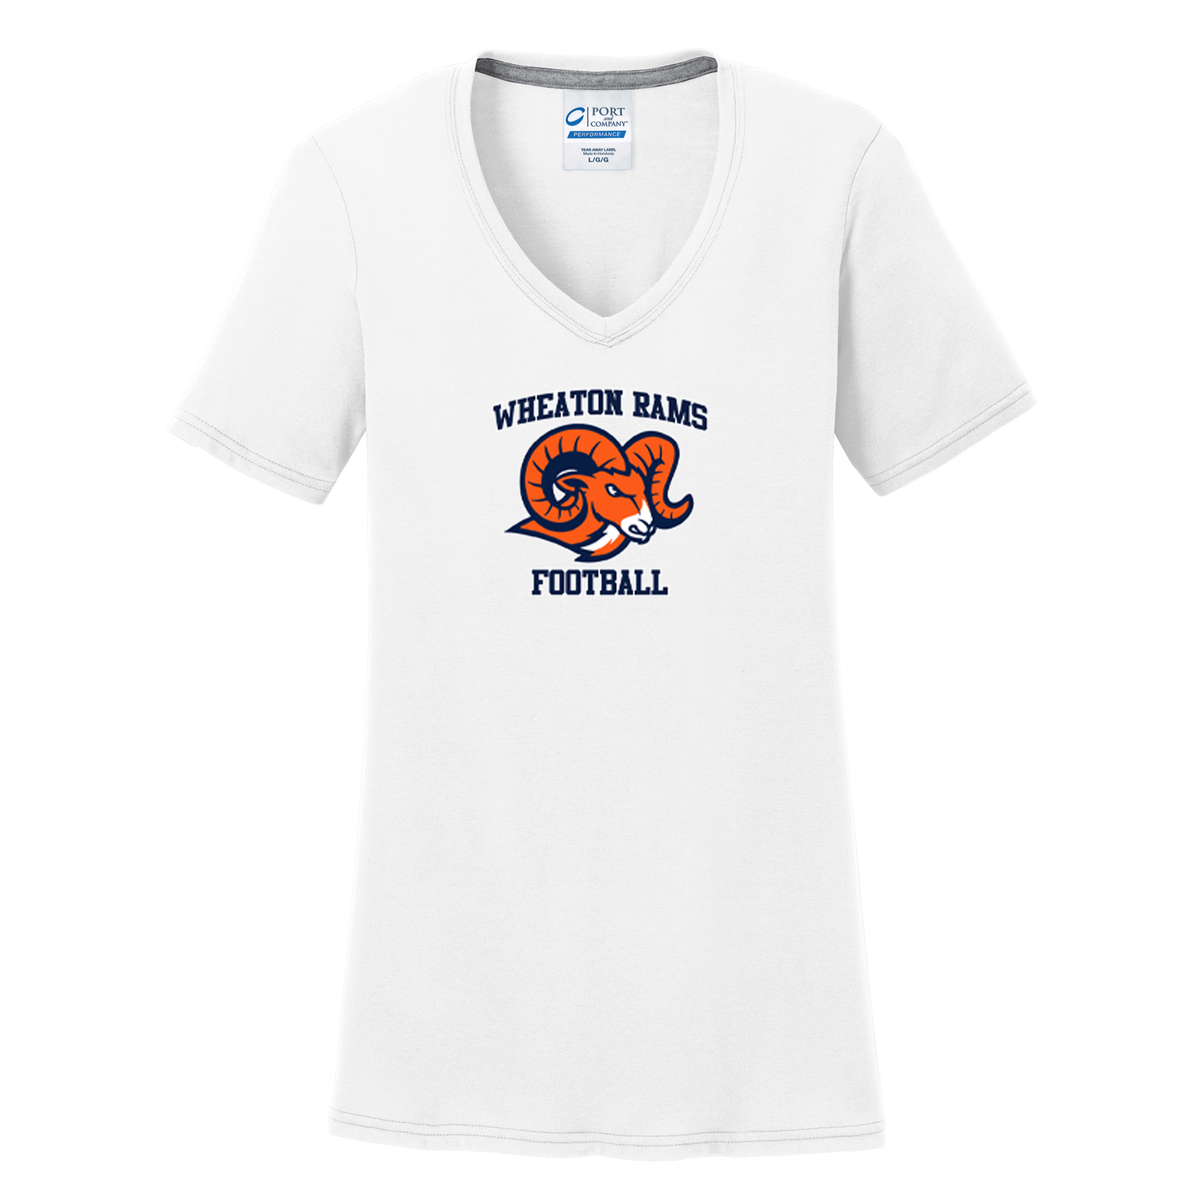 Wheaton Rams Football Women's T-Shirt